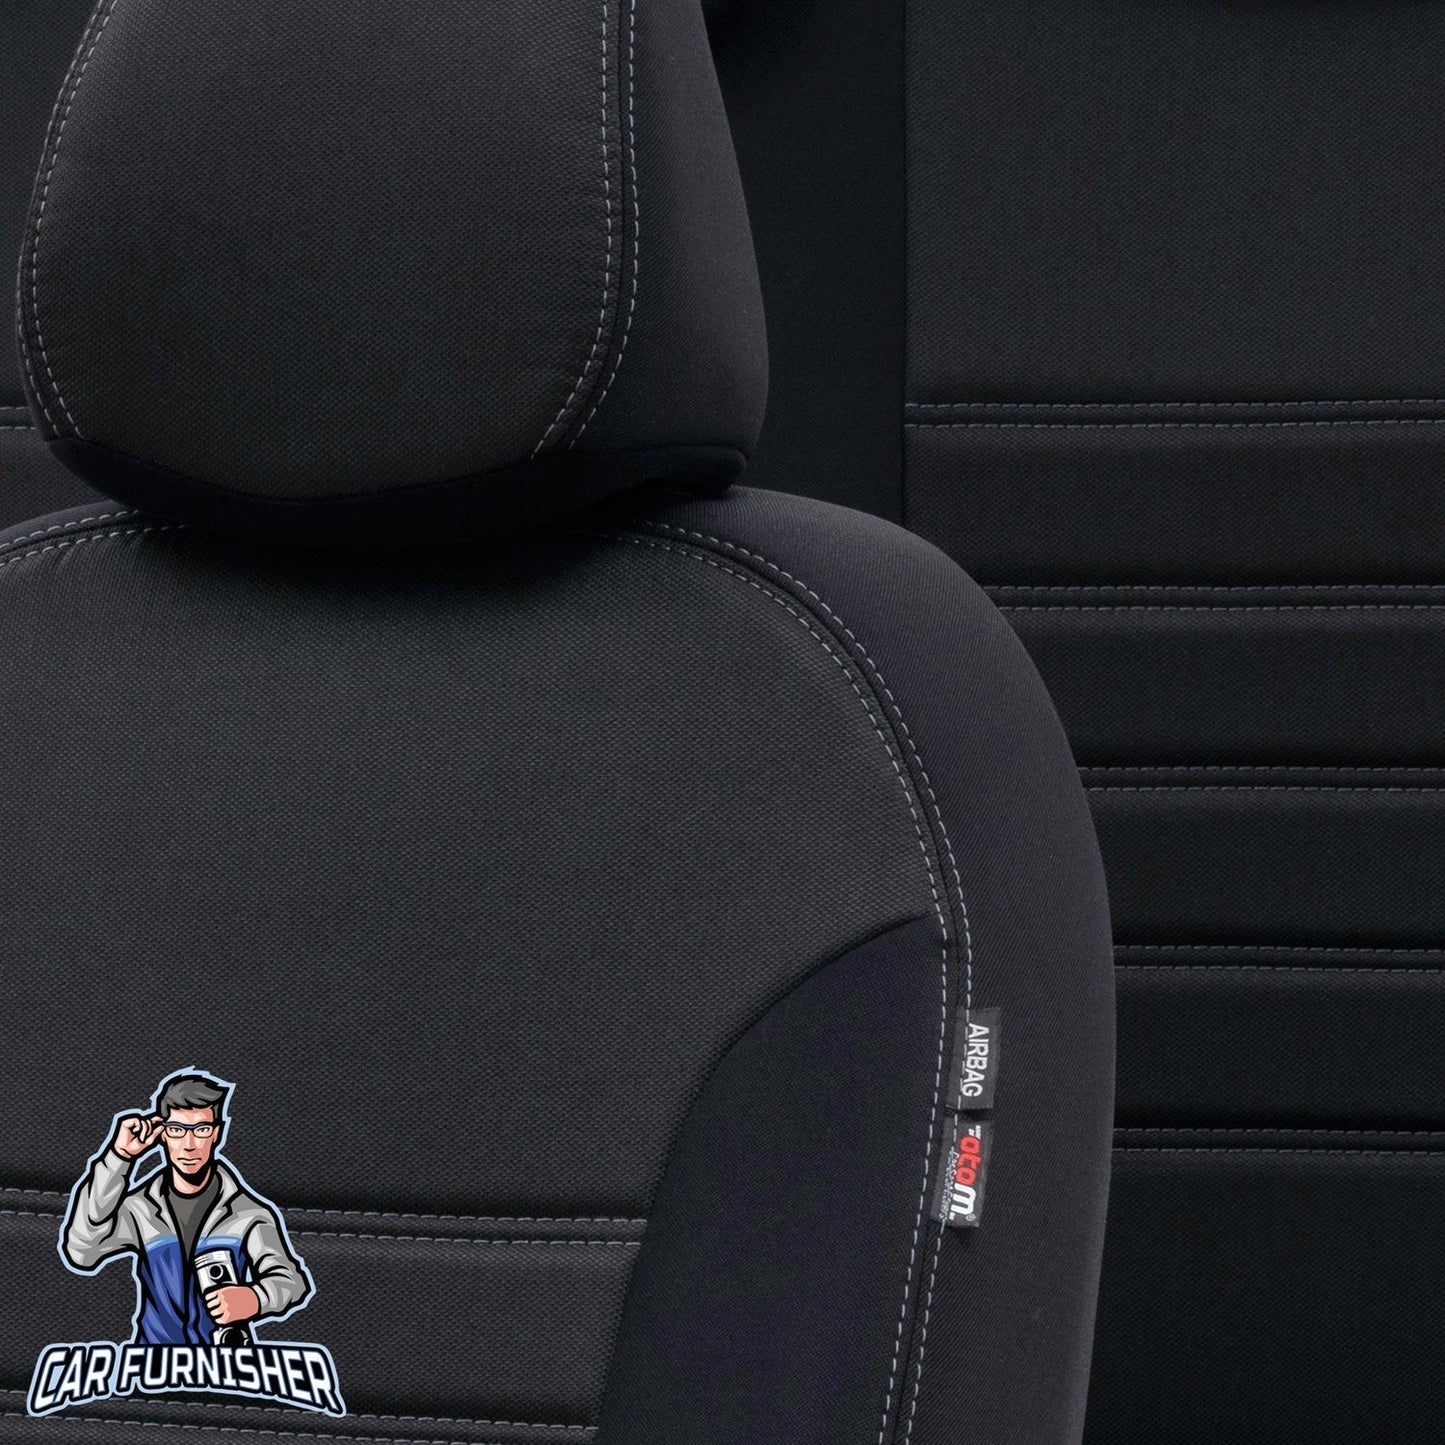 Fiat Tipo Seat Covers Original Jacquard Design Black Jacquard Fabric